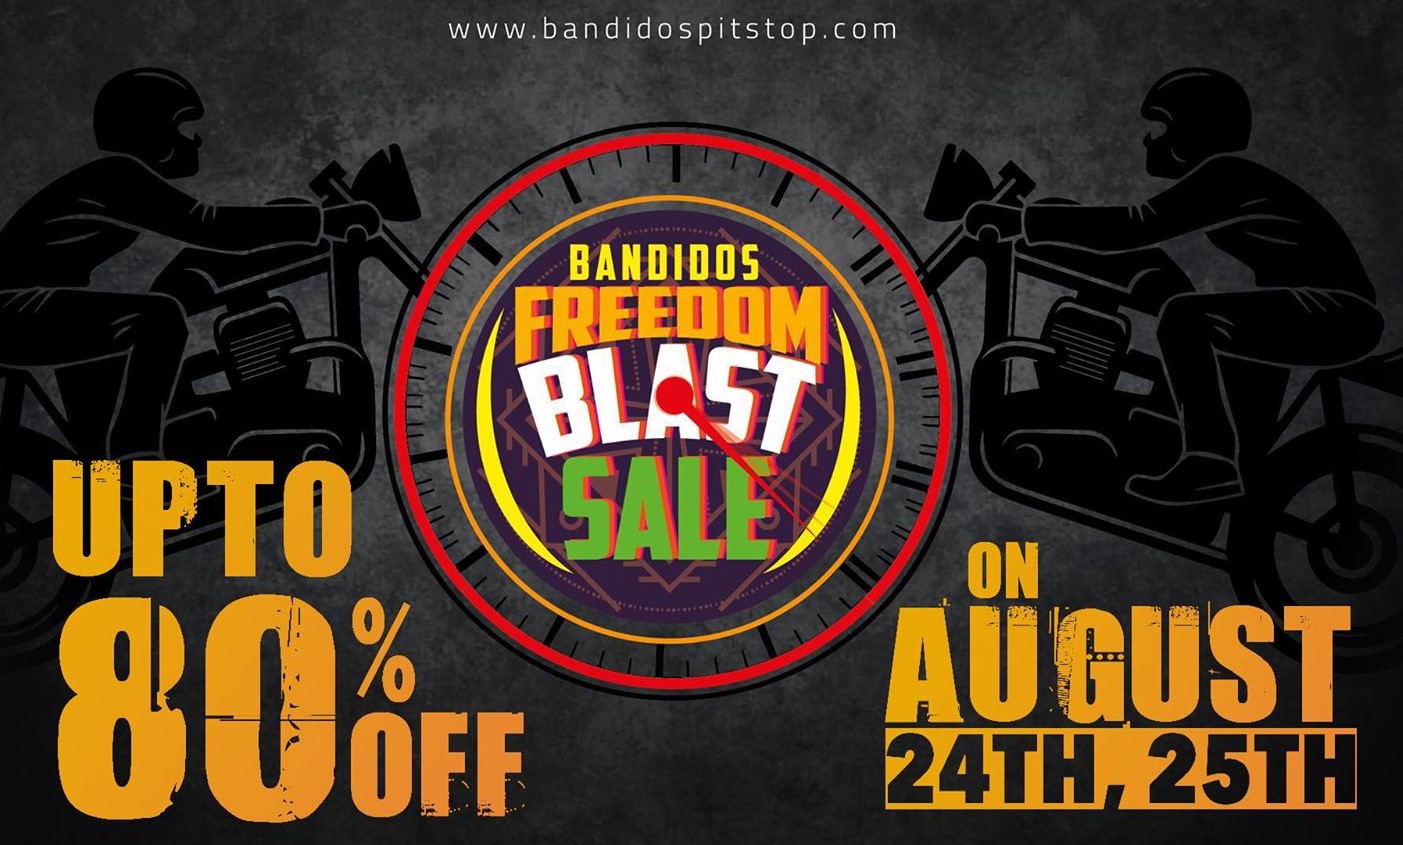 Bandidos Freedom Blast Sale